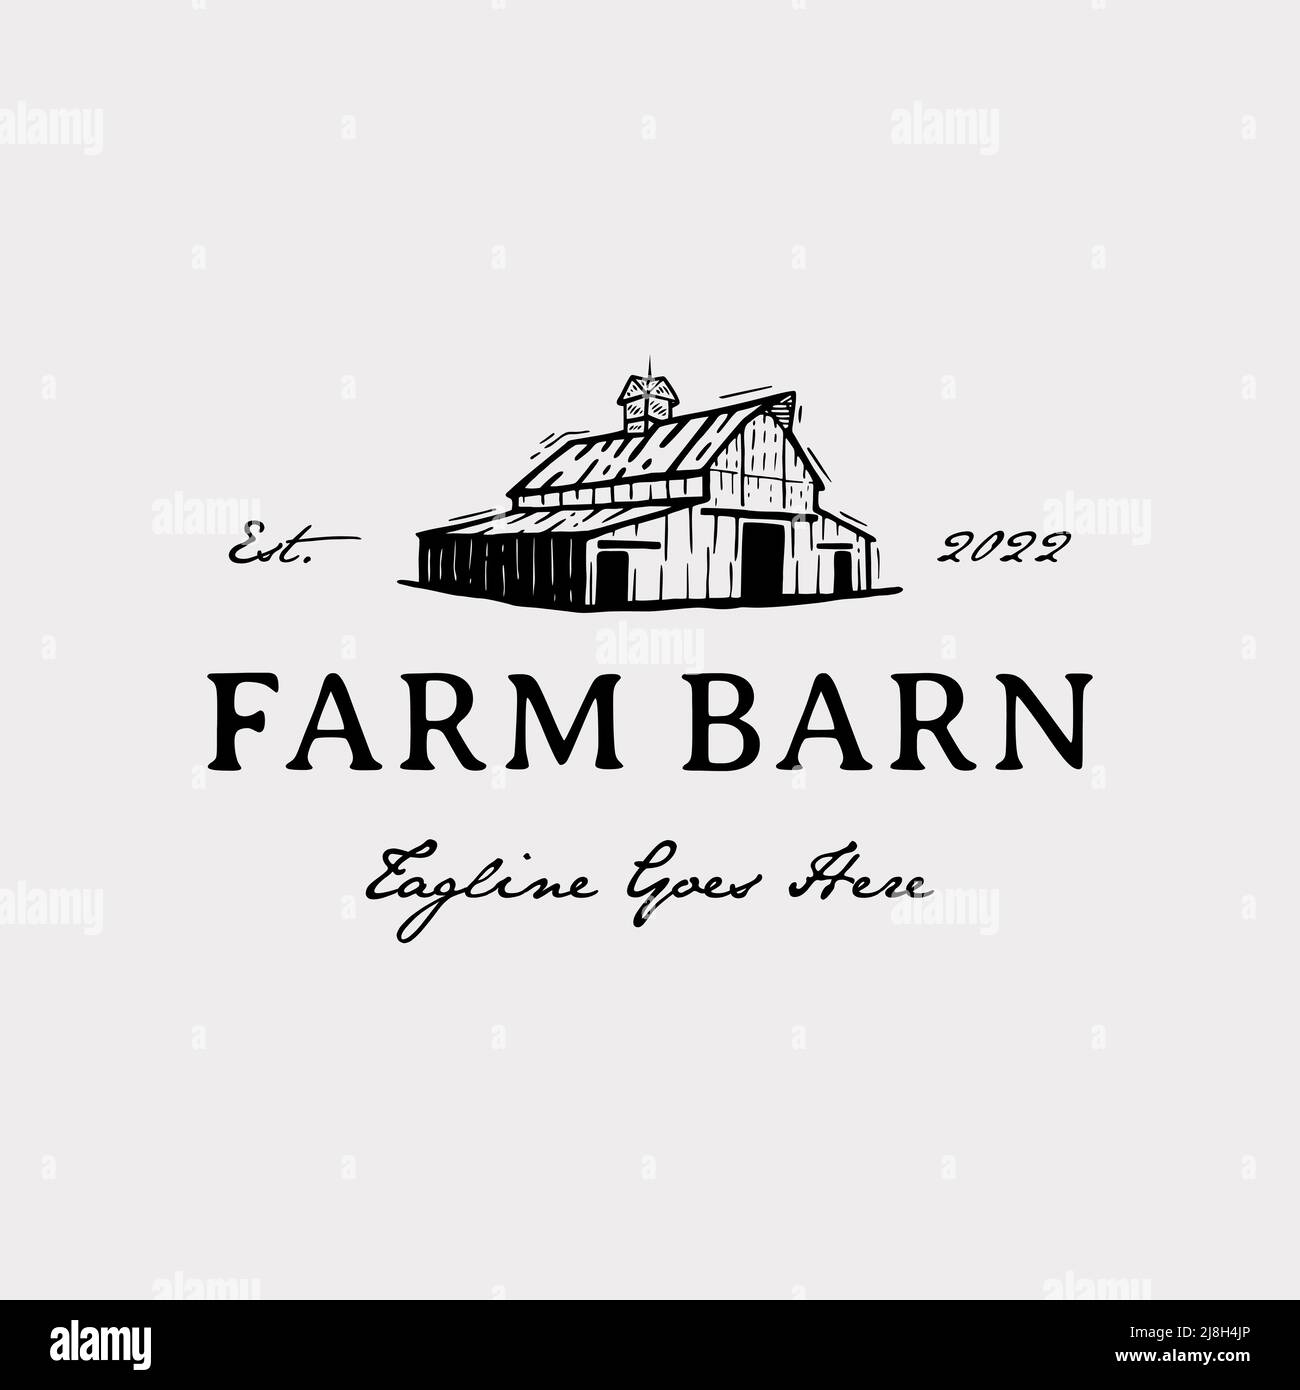 Vintage farm barn logo design - barn wood building house farm cow cattle logo design Stock Vector